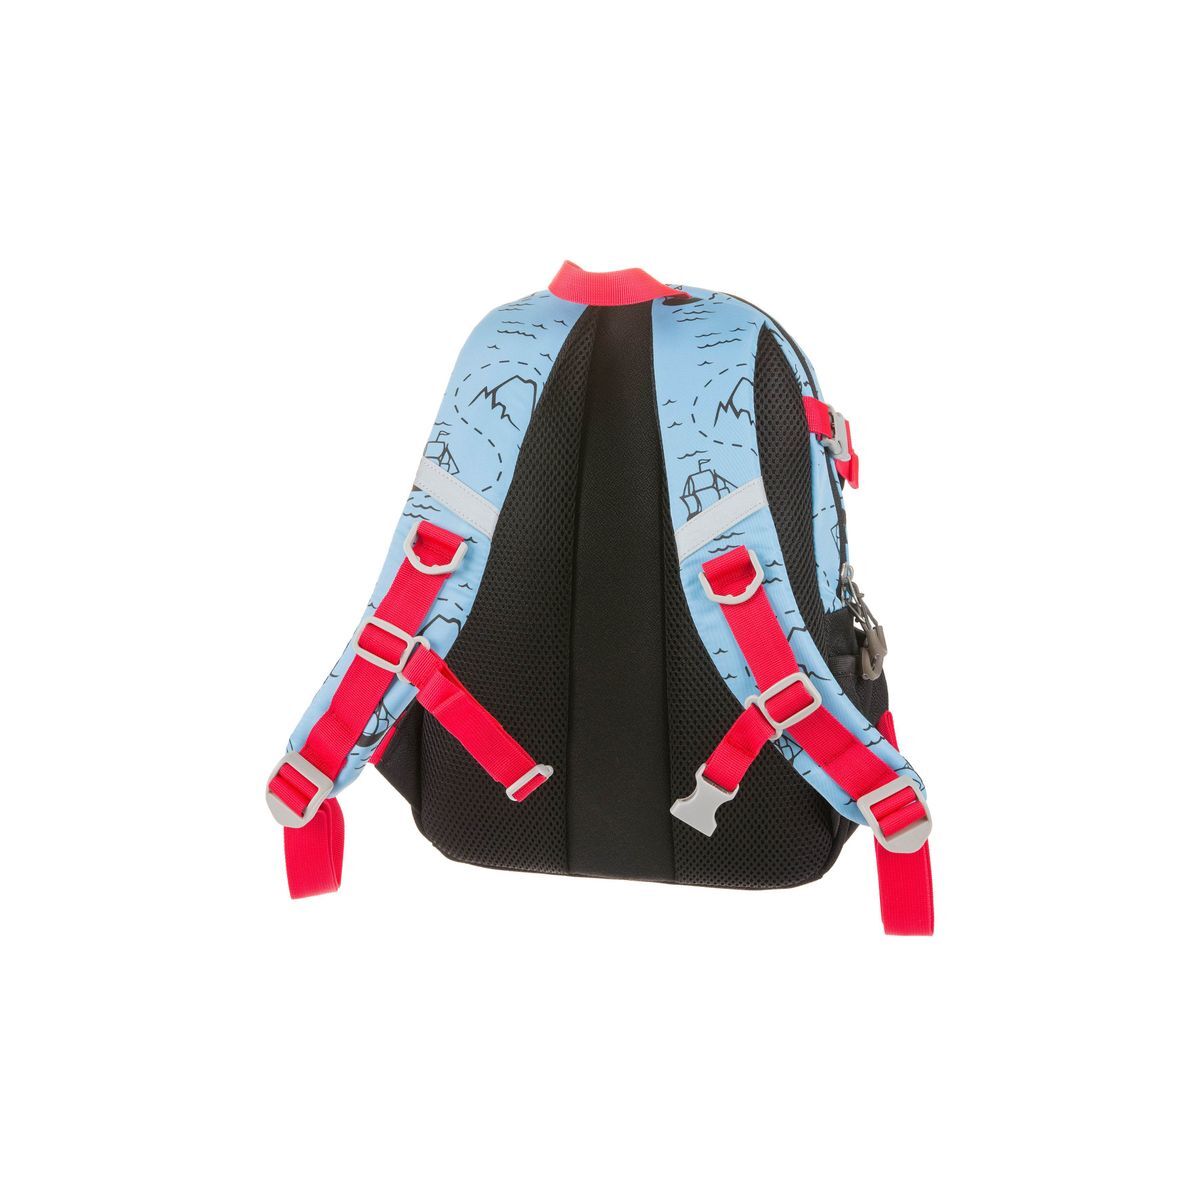 Kinderrucksack Kids Backpack - Pirate, 11 Liter, blau